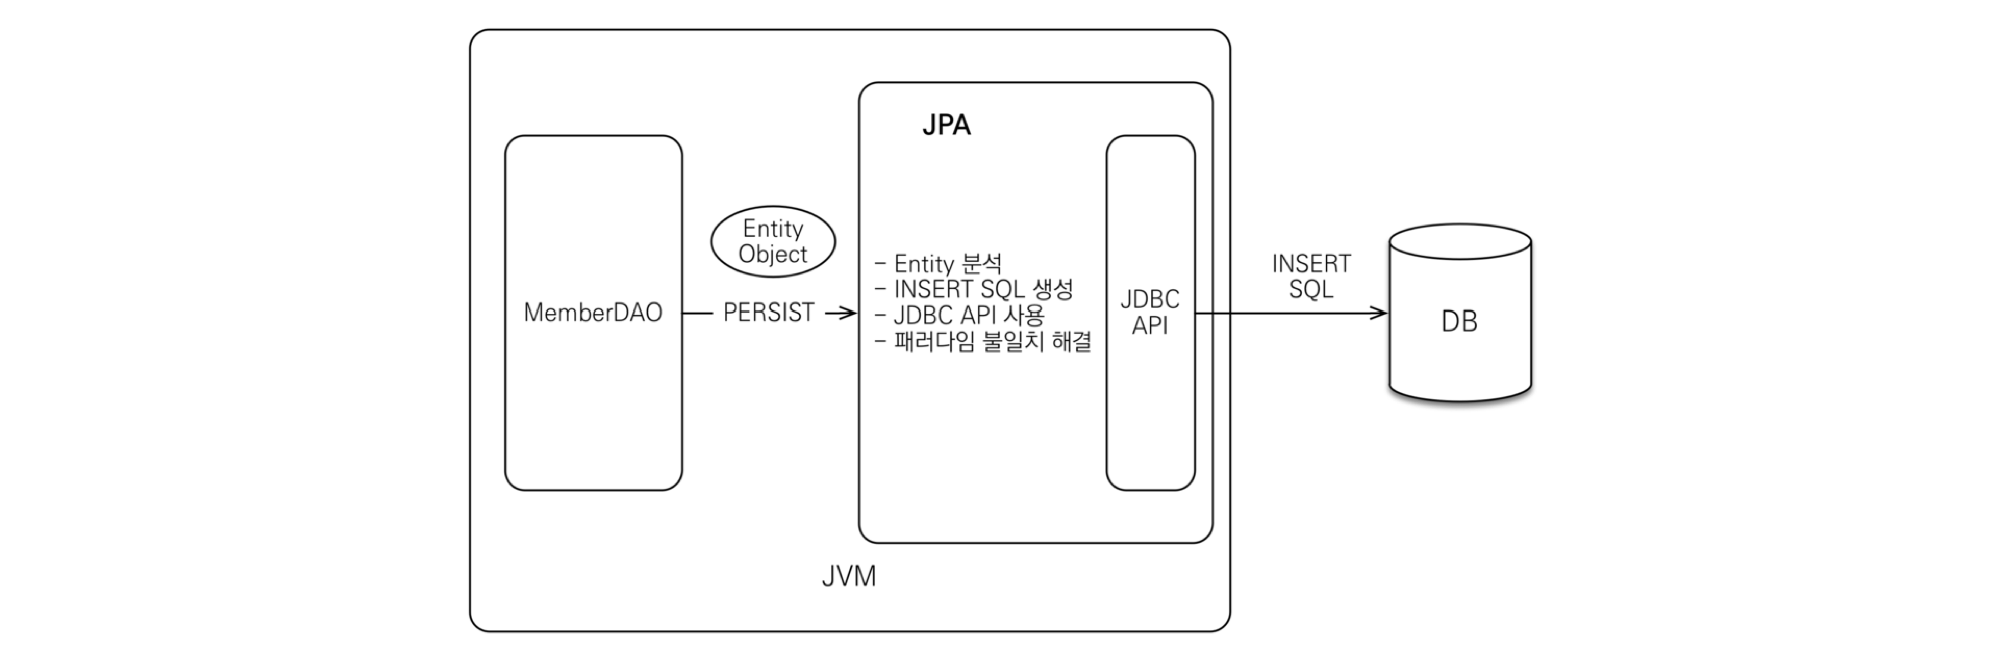 jpa-insert-structure